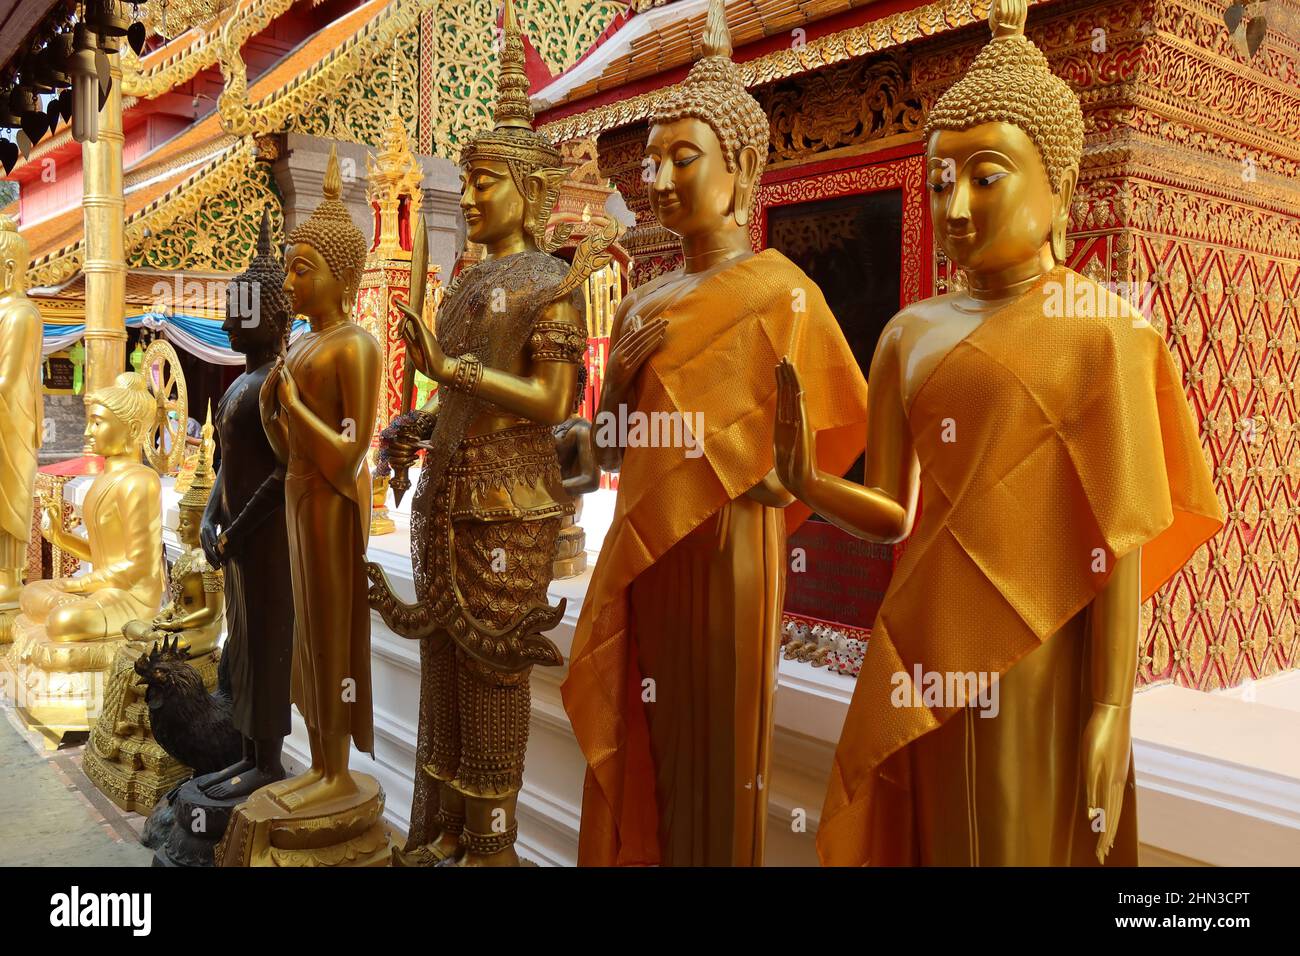 Gold Buddha statues in a row, Wat Phra That, Doi Suthep temple, Chiang Mai, Thailand Stock Photo